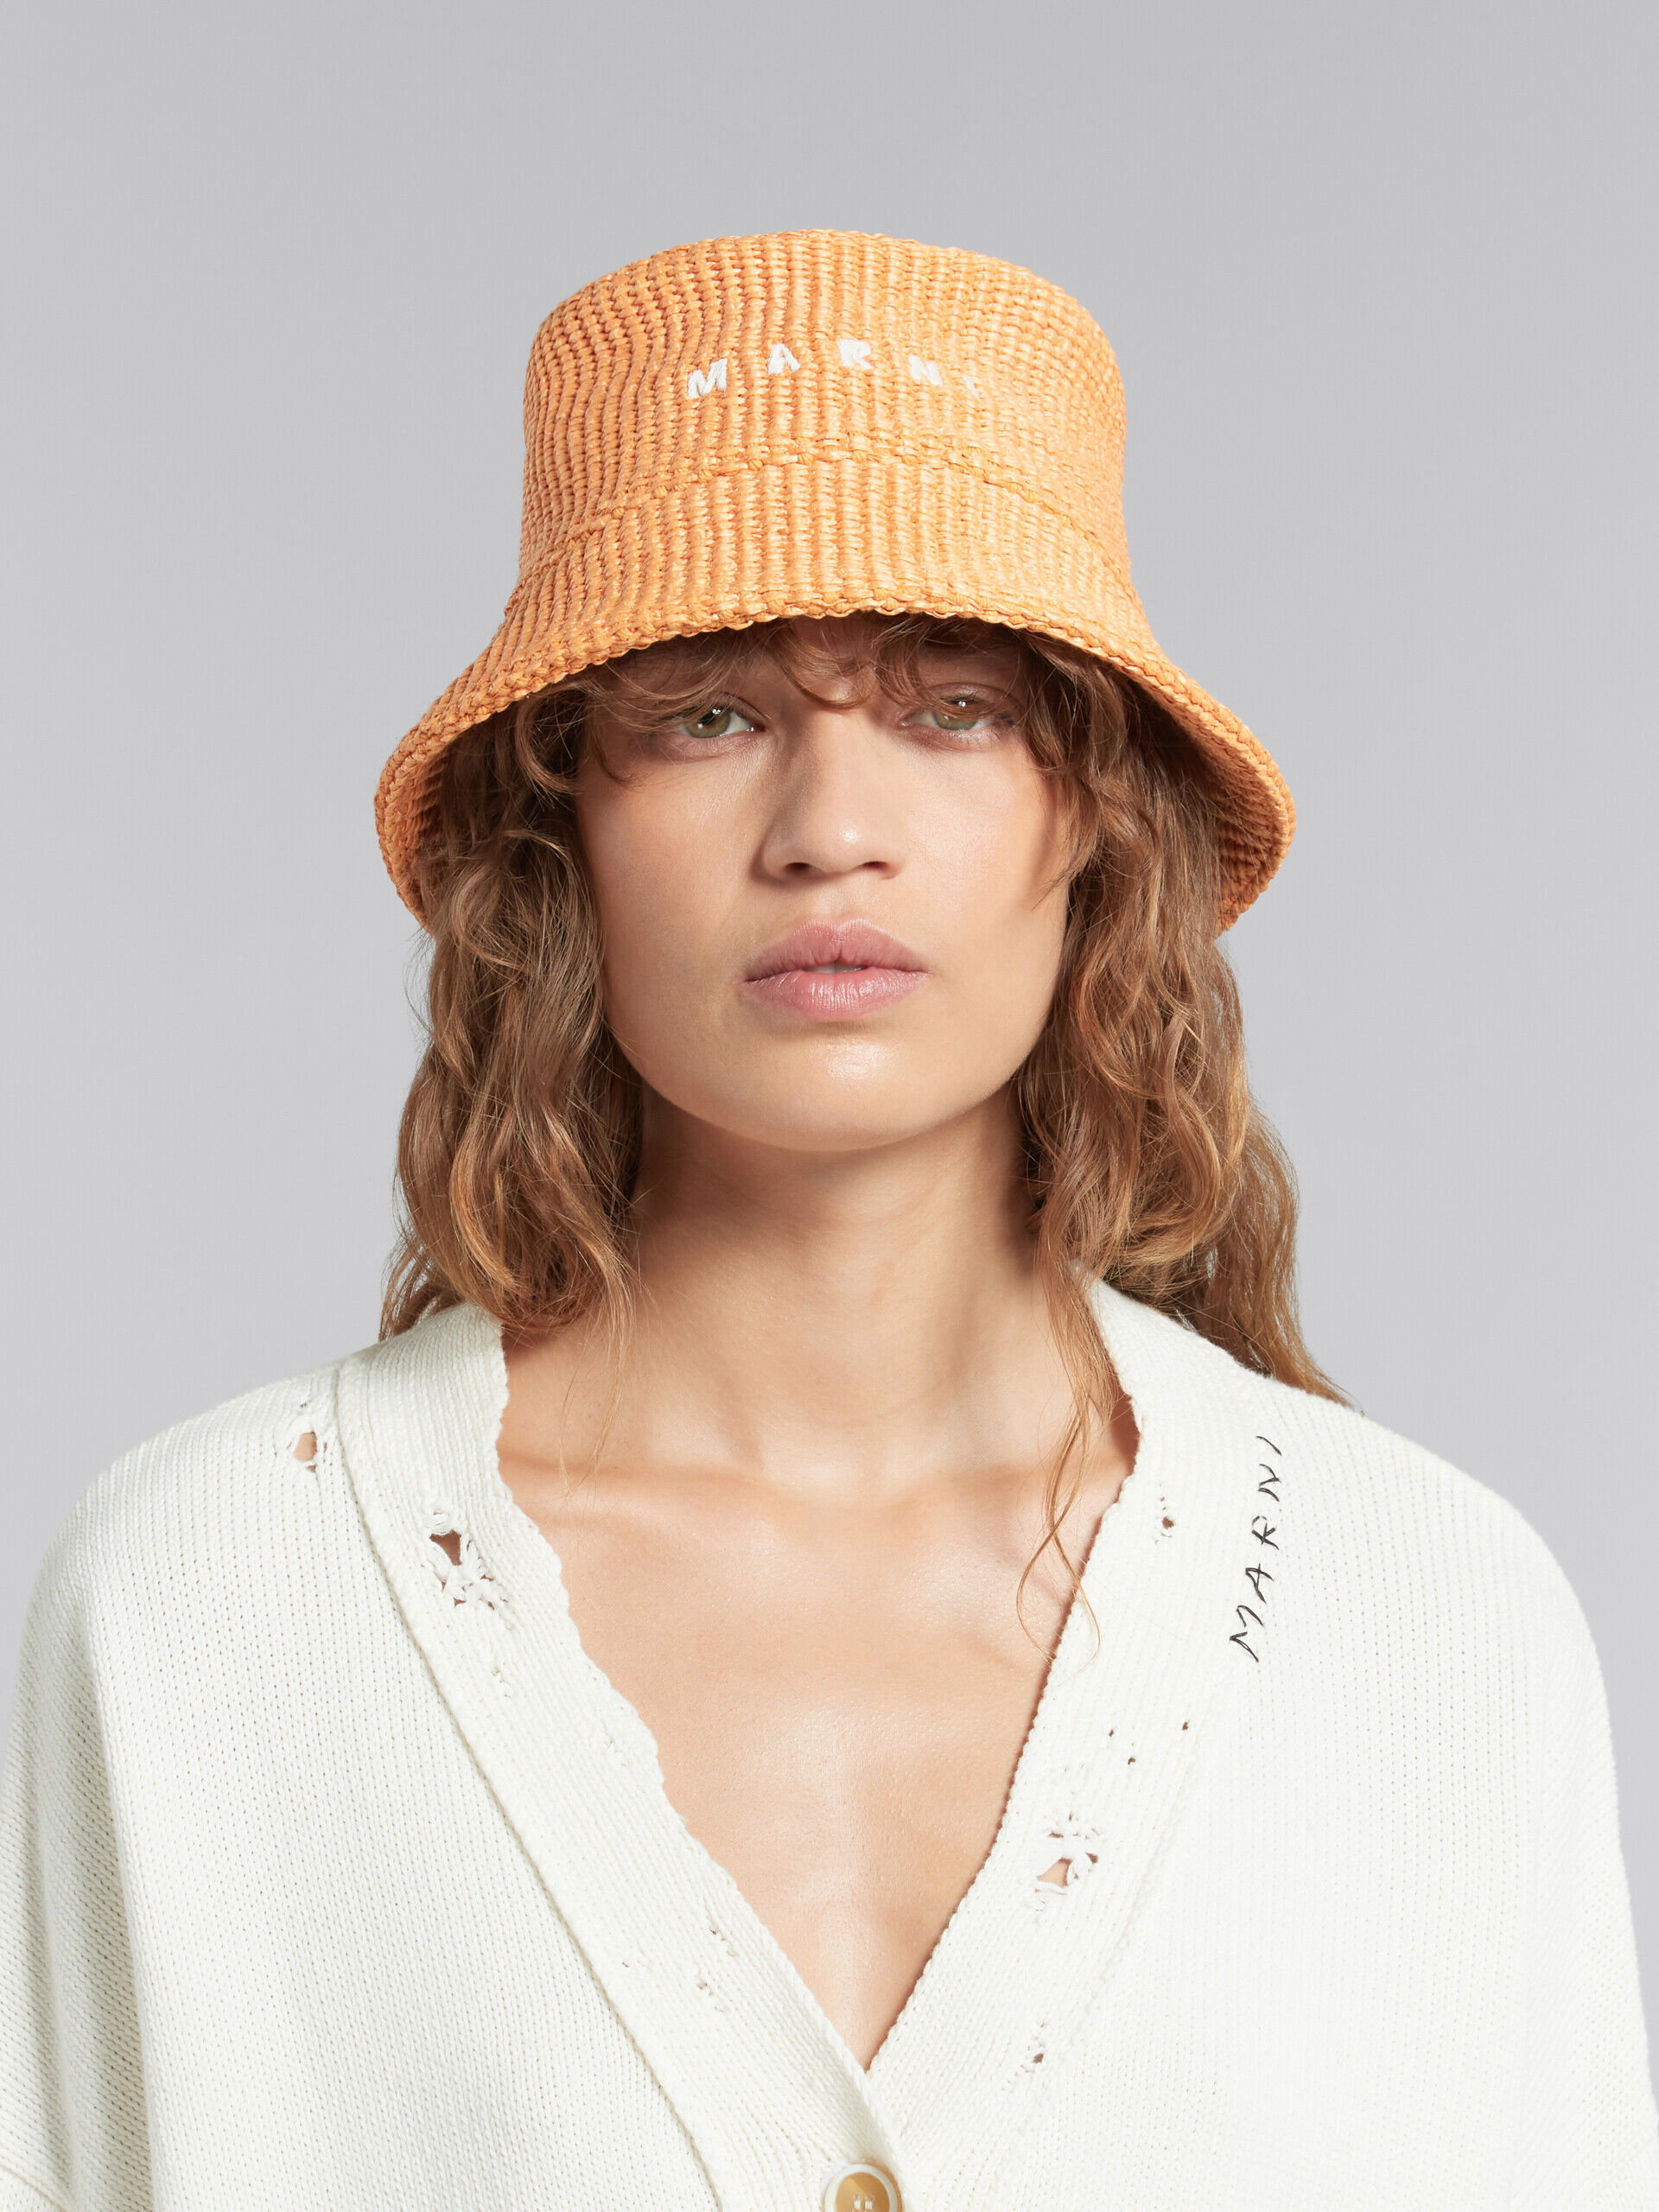 Orange raffia bucket hat with logo embroidery | Marni